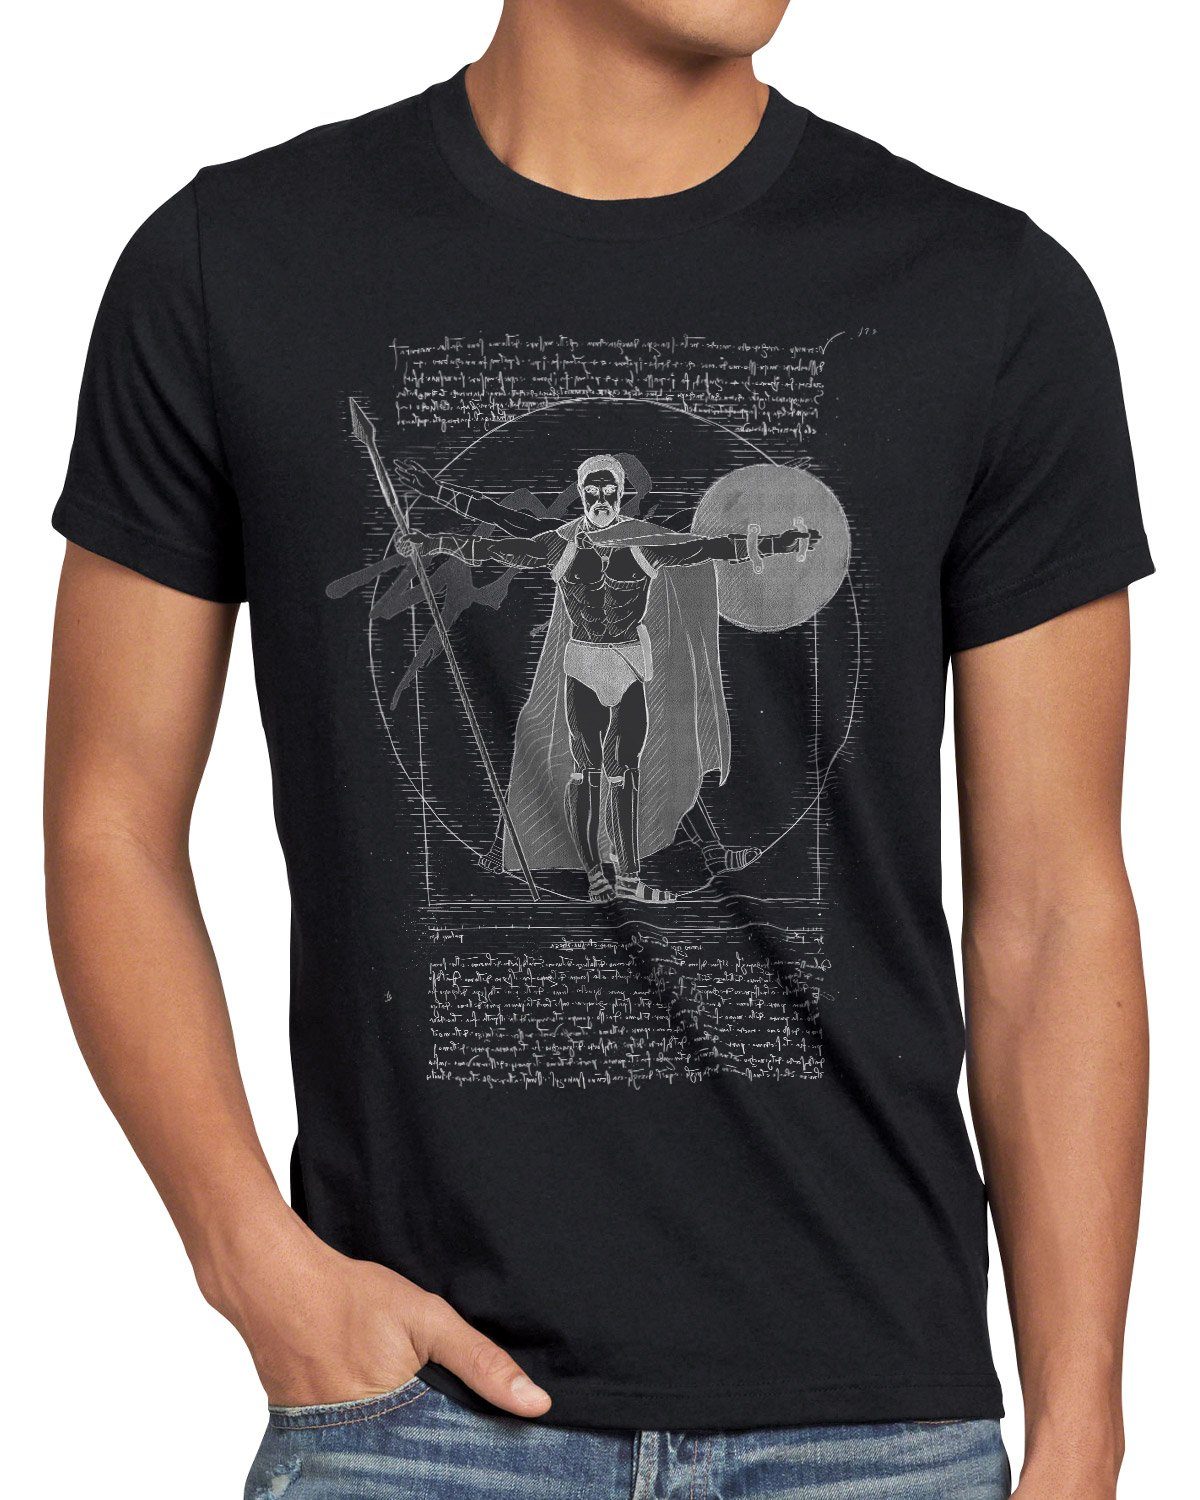 T-Shirt kämpfer Print-Shirt Herren schwarz dreihundert Spartaner style3 300 Vitruvianischer antiker